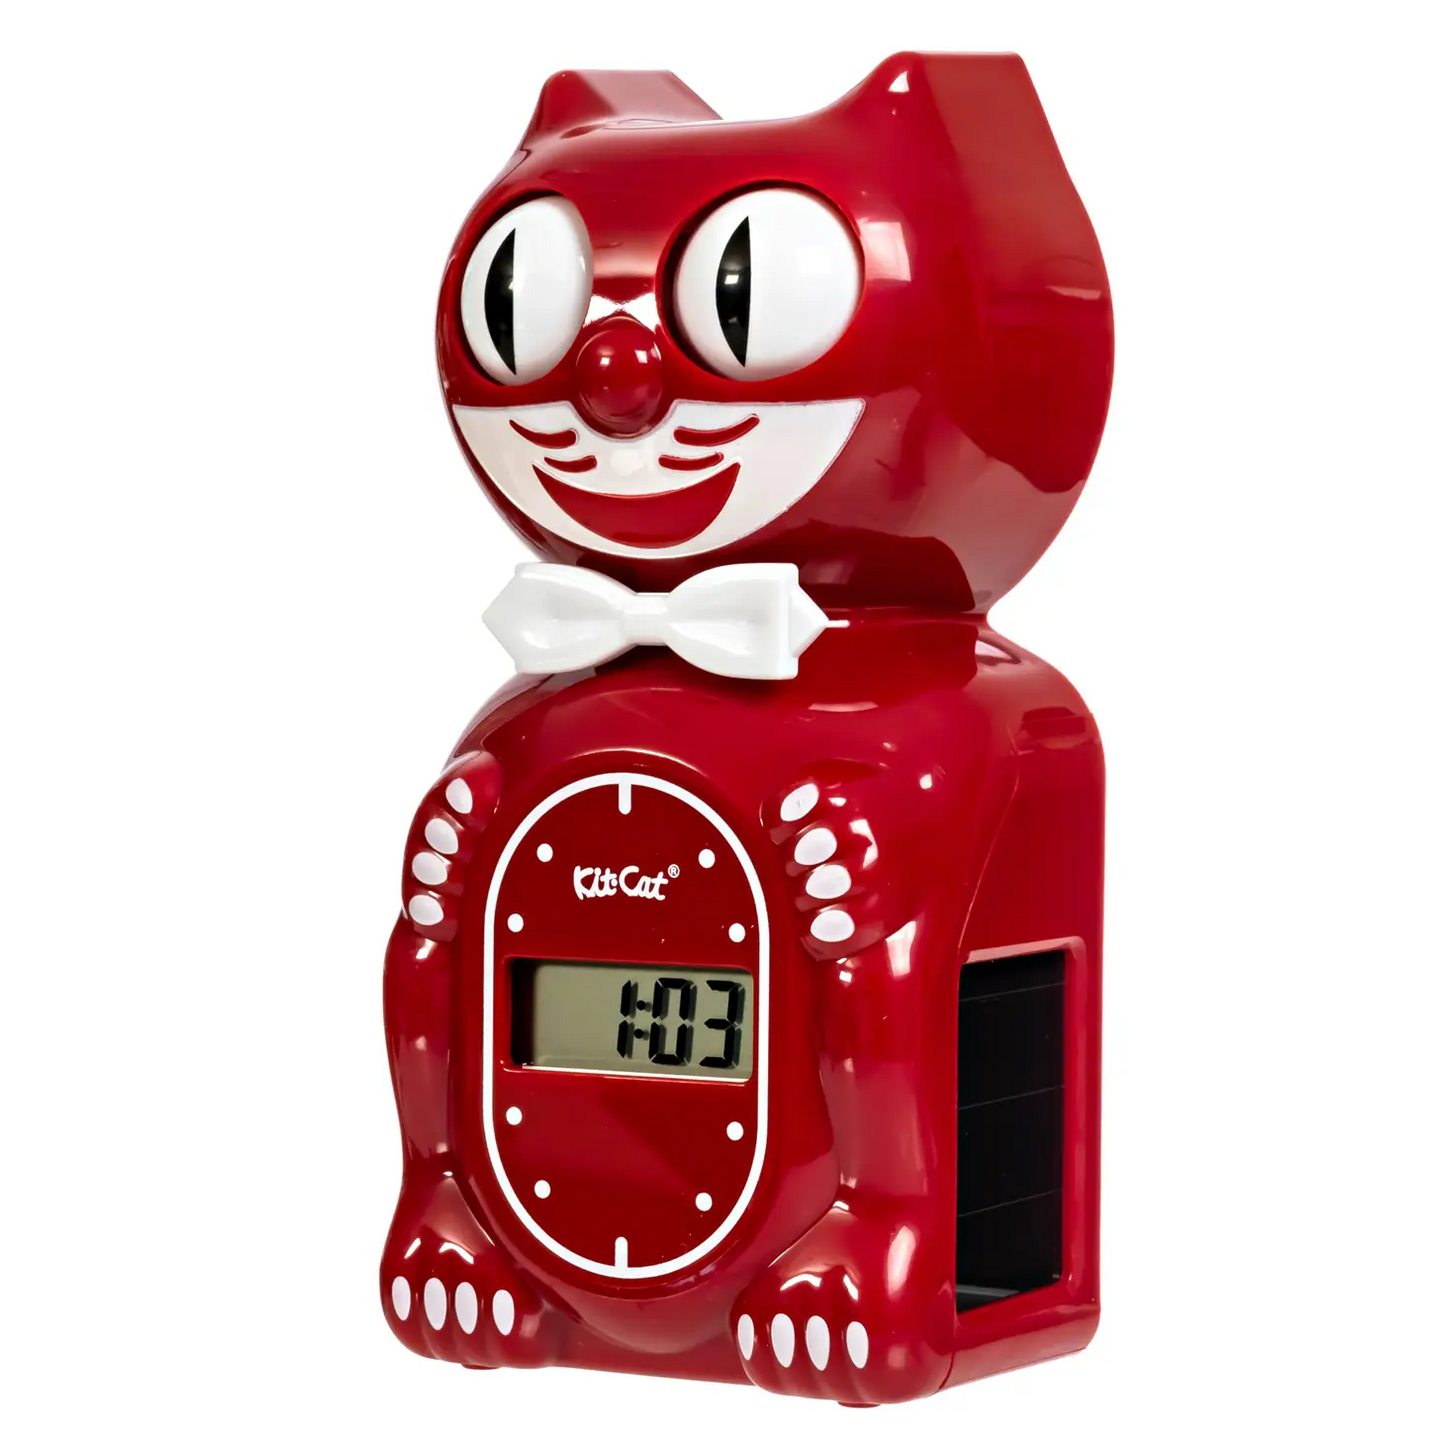 Solar Kit-Cat Digital Alarm Klock